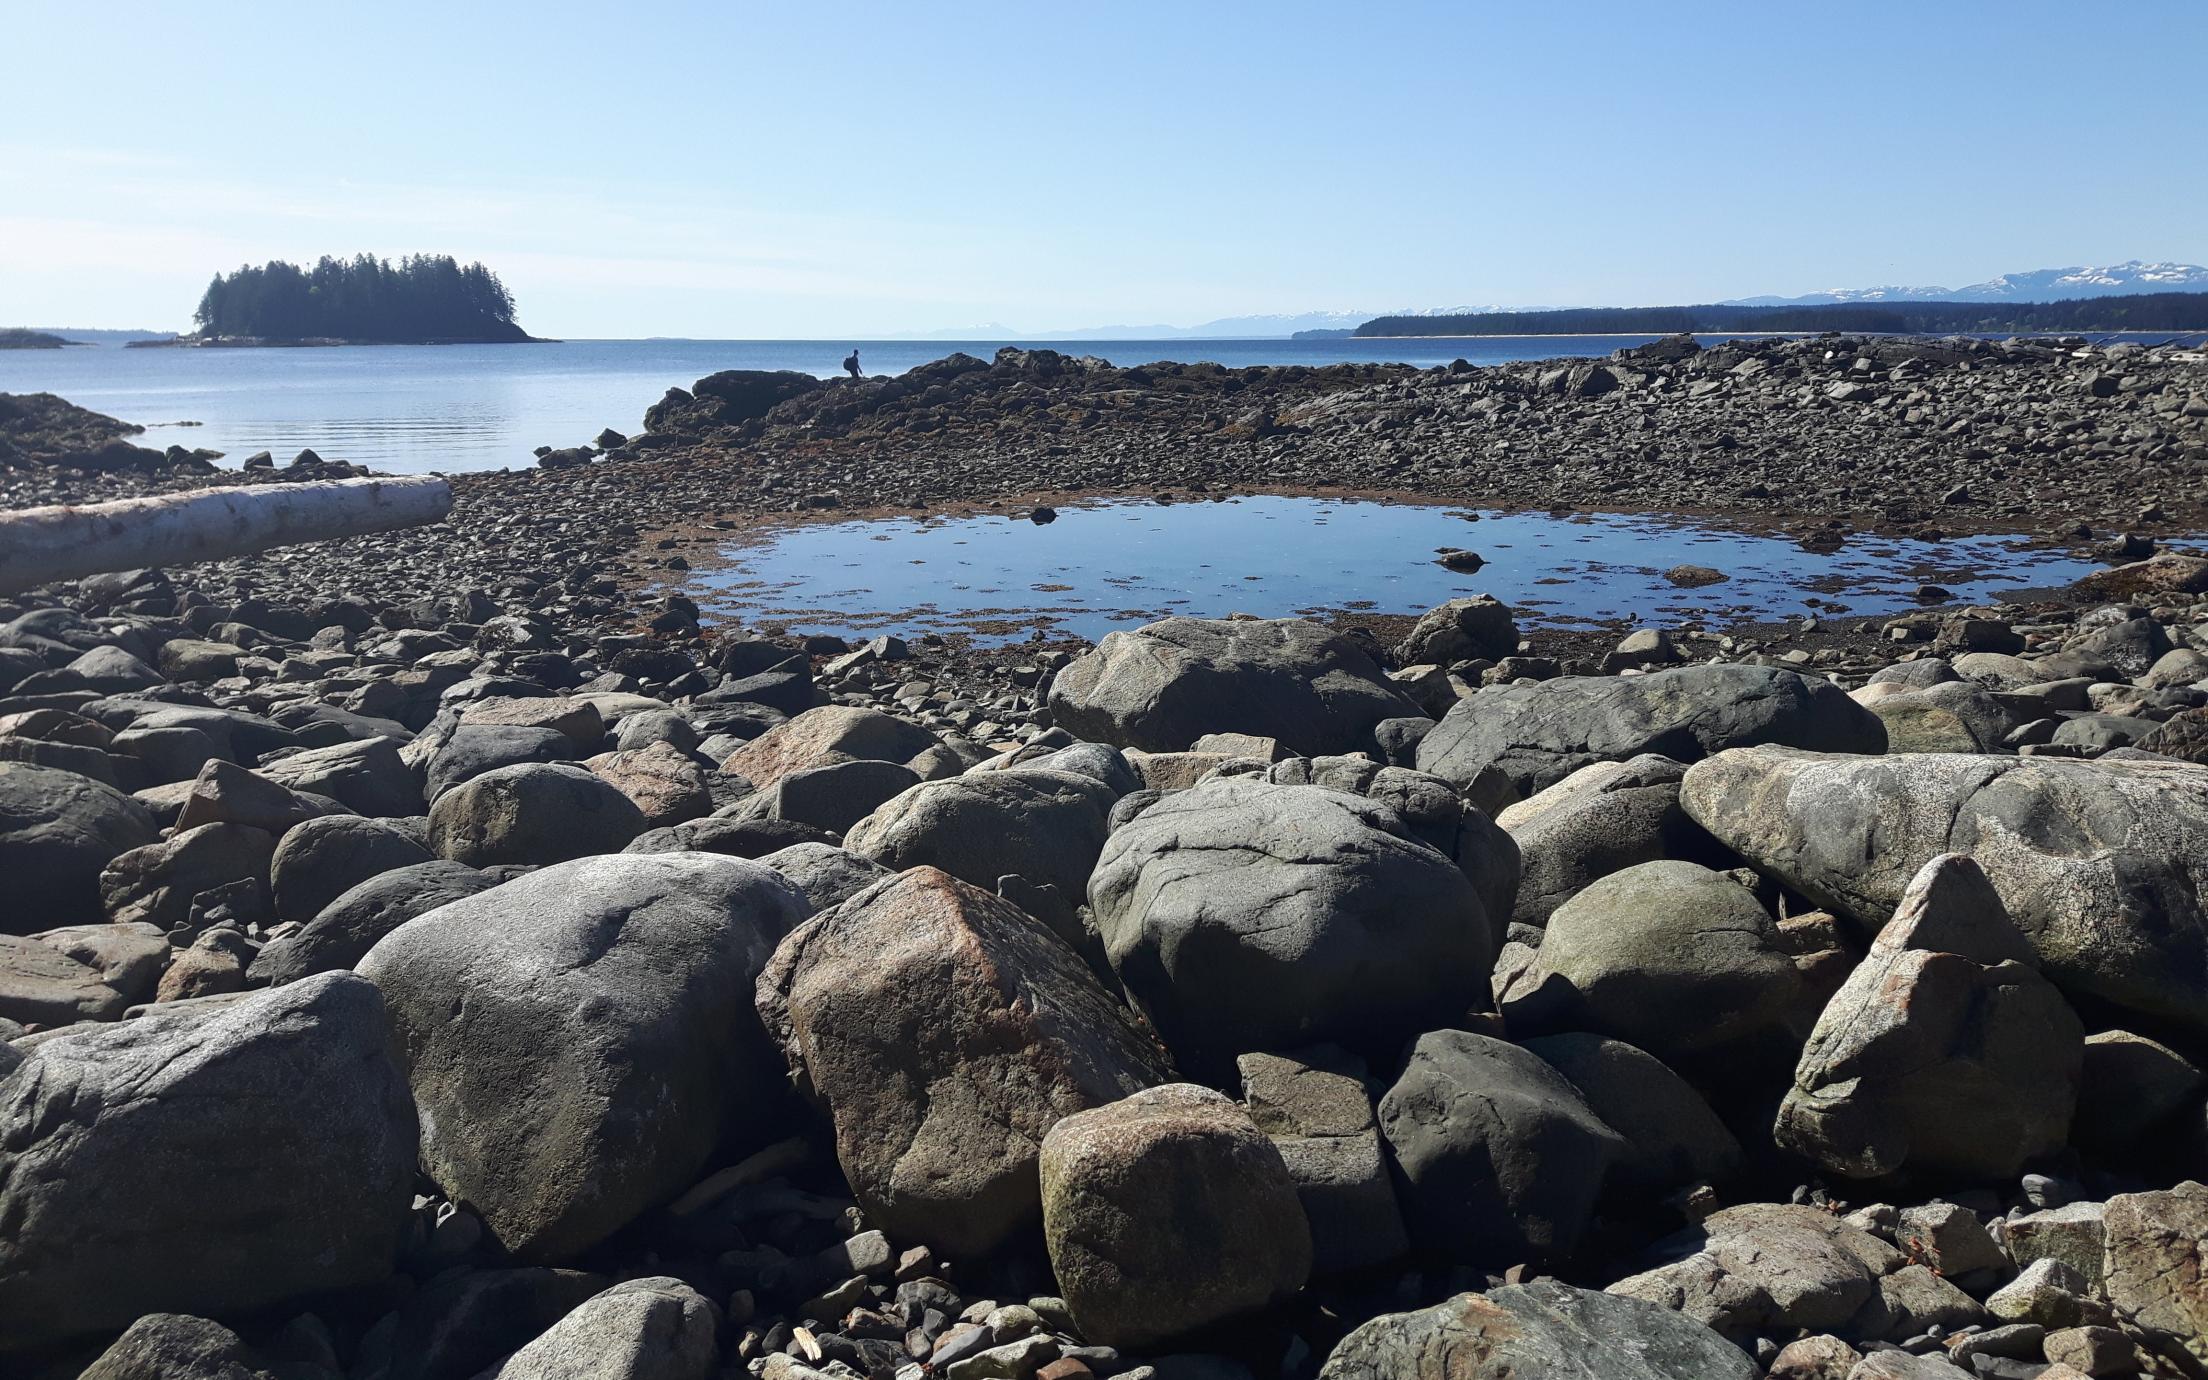 Scenery image on Quadra Island, GEOL206 Field school location